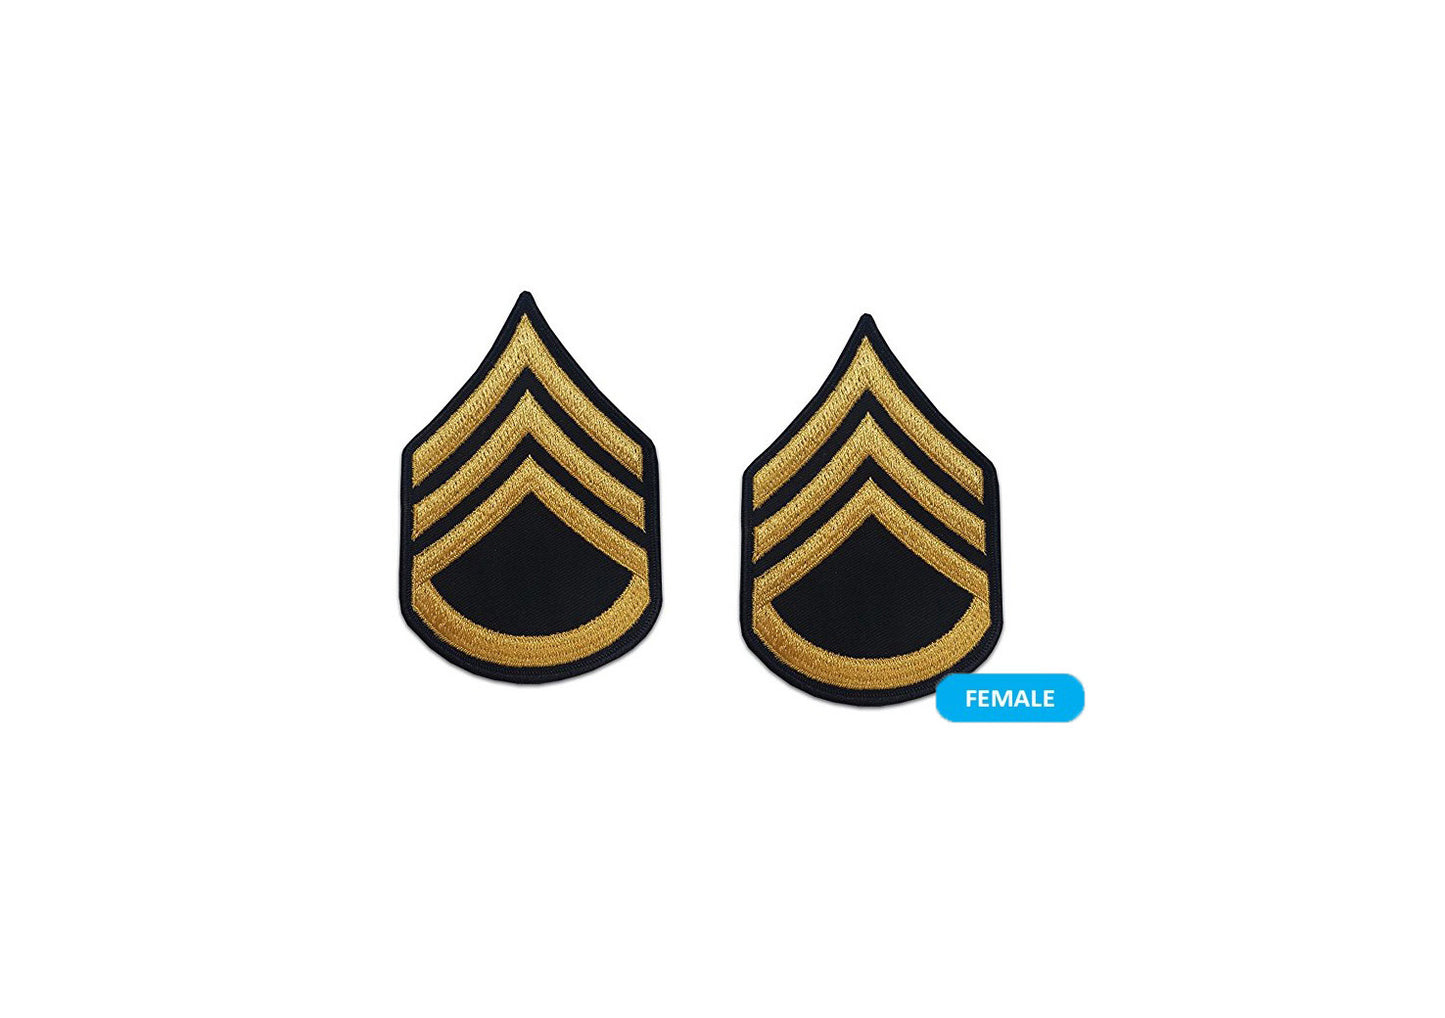 U.S. Army E6 Staff Sergeant Gold on Blue Sew-on - Small/Female